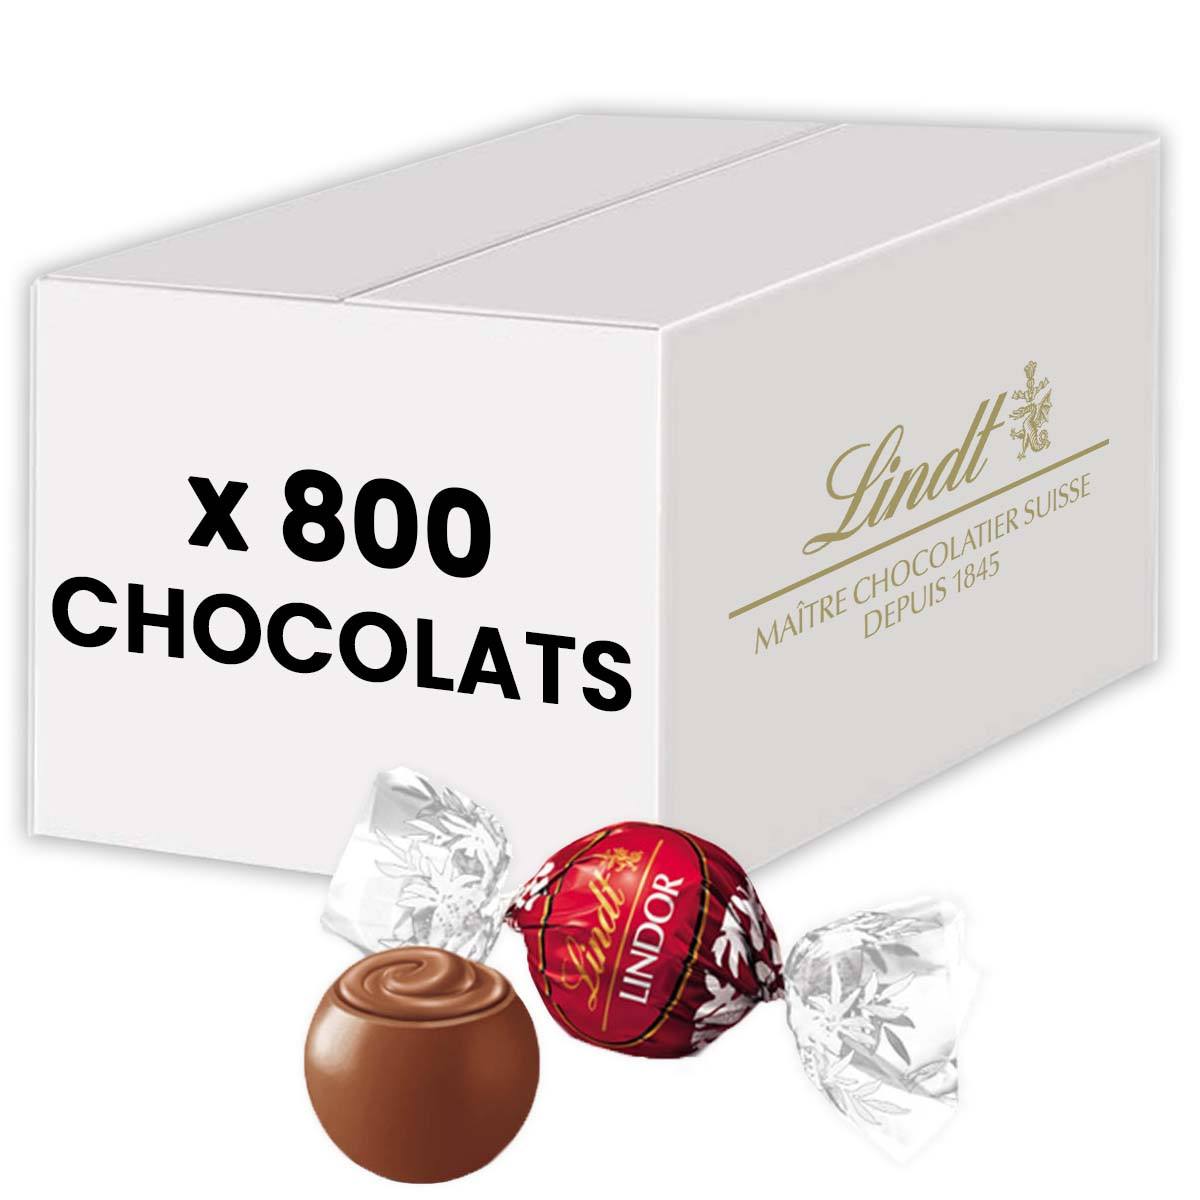 https://media1.coffee-webstore.com/36999-thickbox_default/carton-chocolat-au-lait-lindt-lindor-800-chocolats-10-kg.jpg